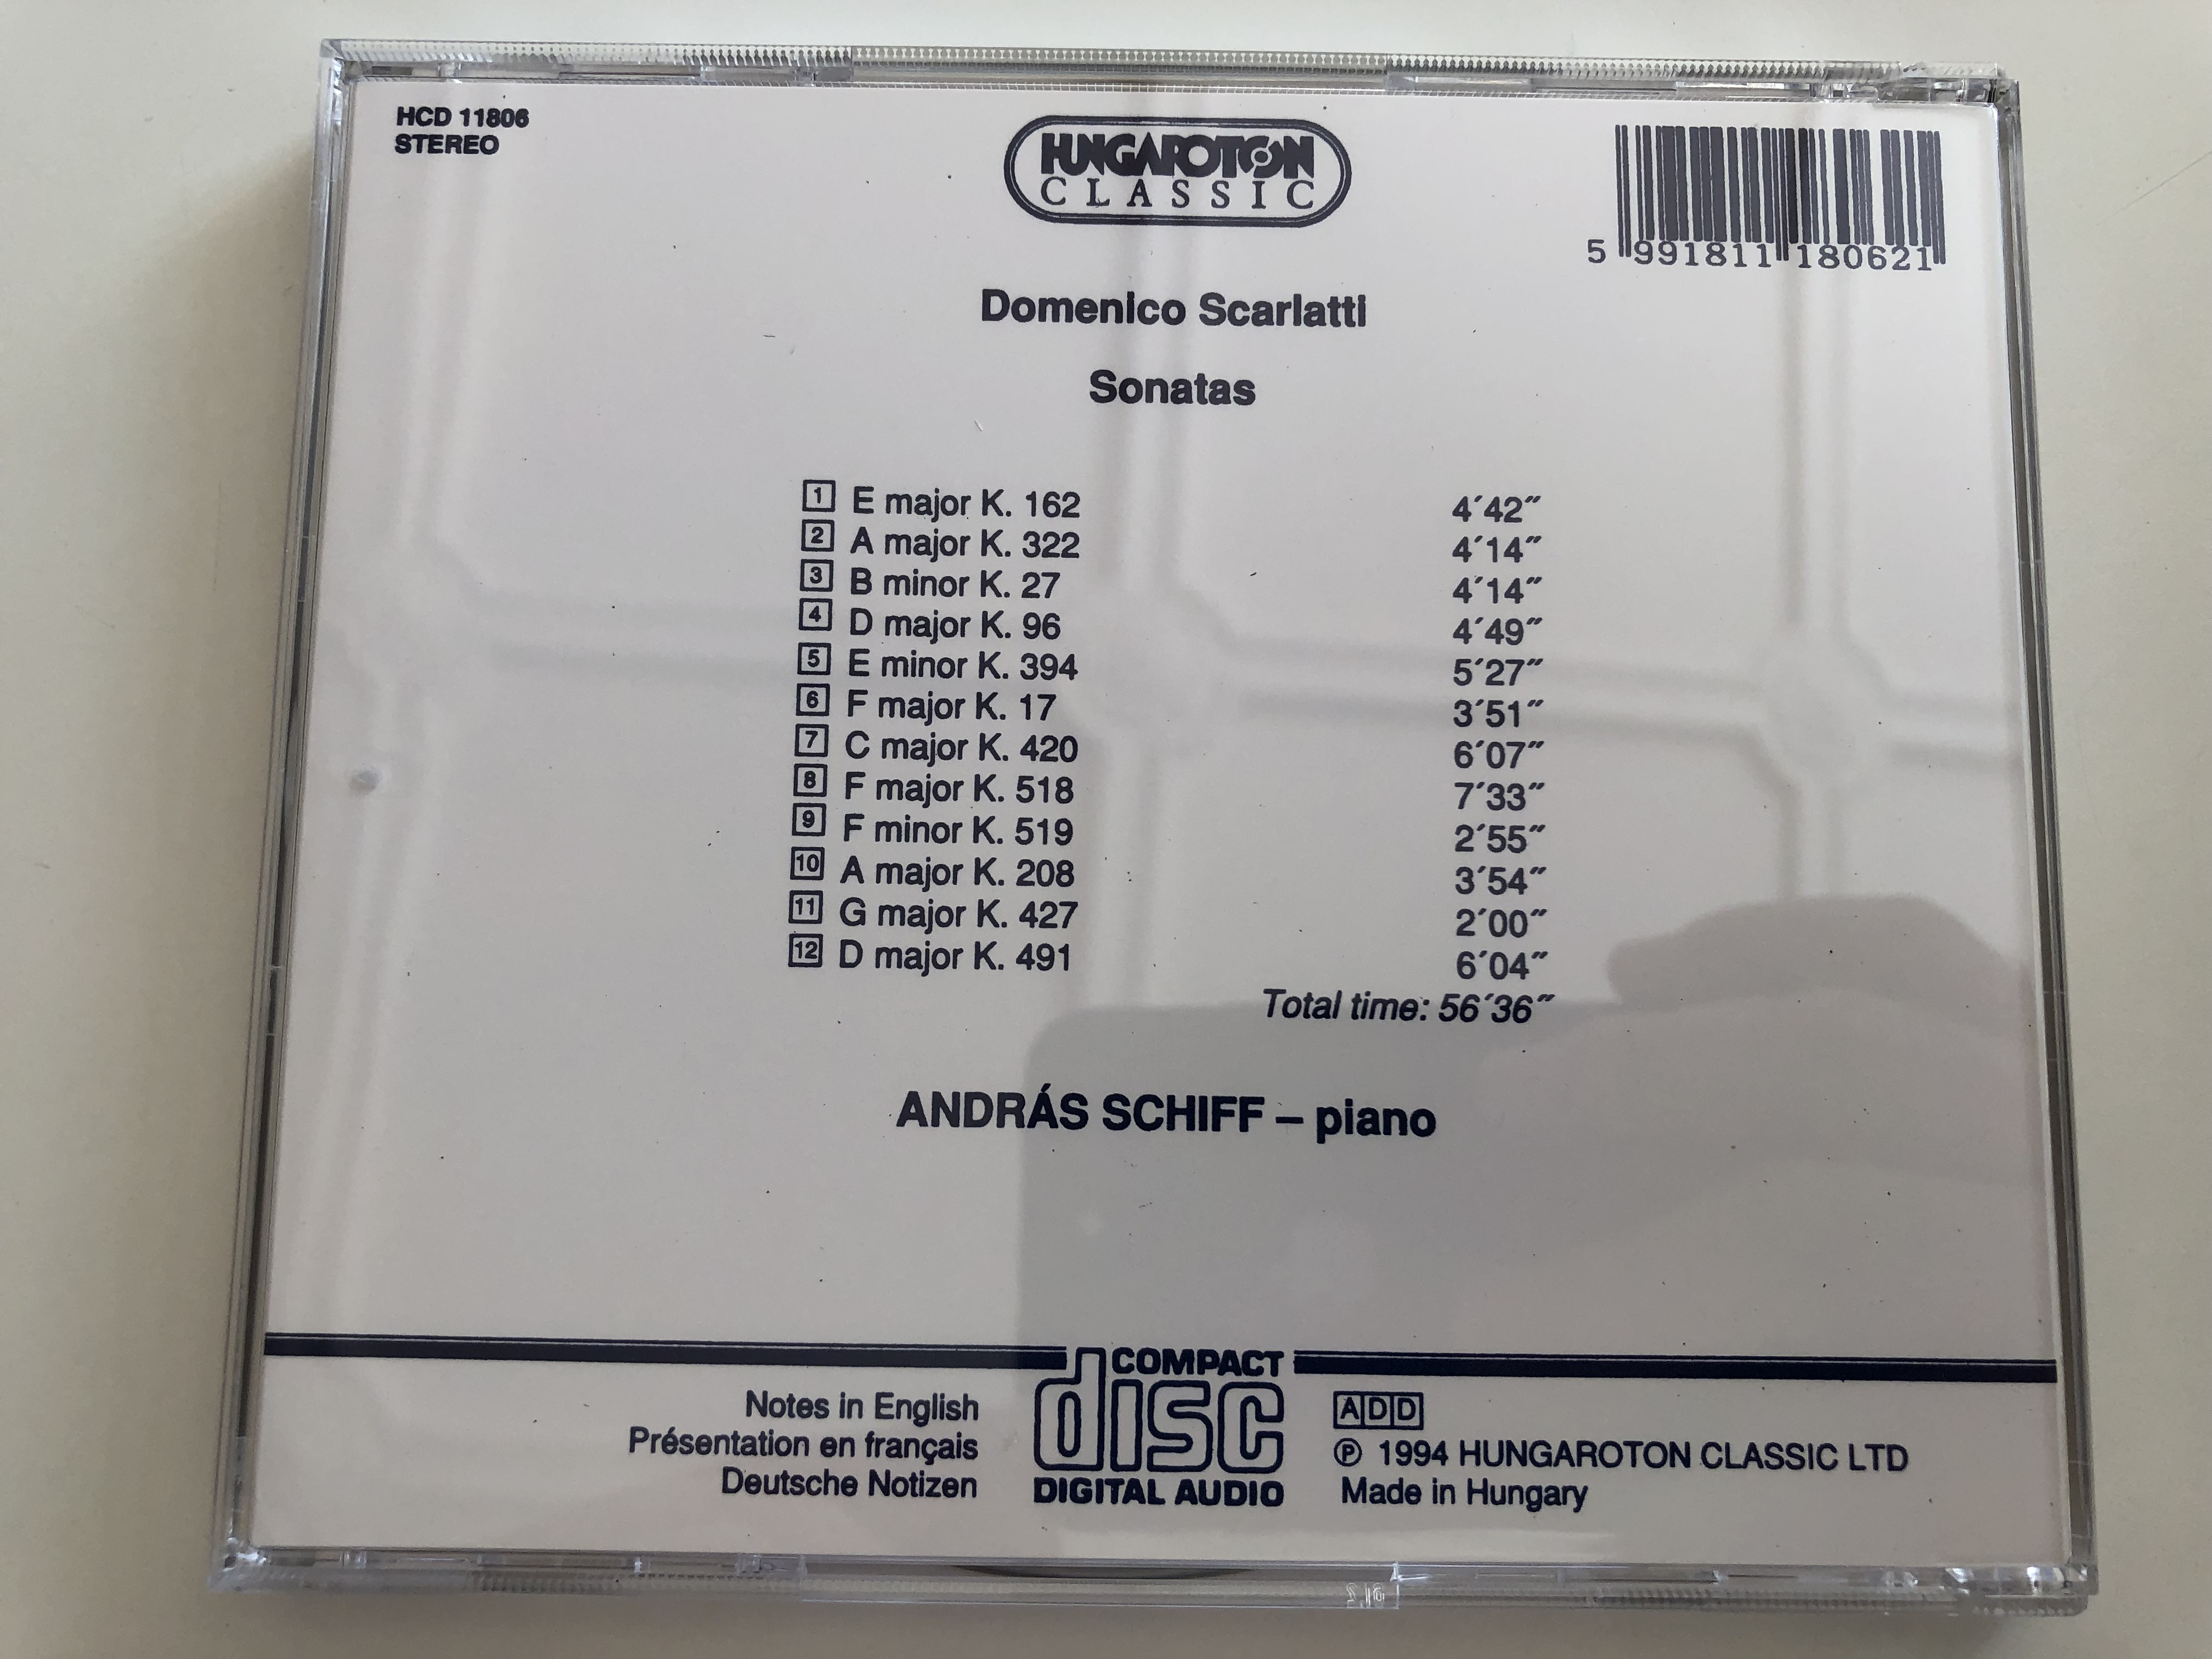 Domenico Scarlatti - 12 Sonatas / András Schiff piano / Hungaroton Classic  Audio CD 1994 / HCD11806 - bibleinmylanguage